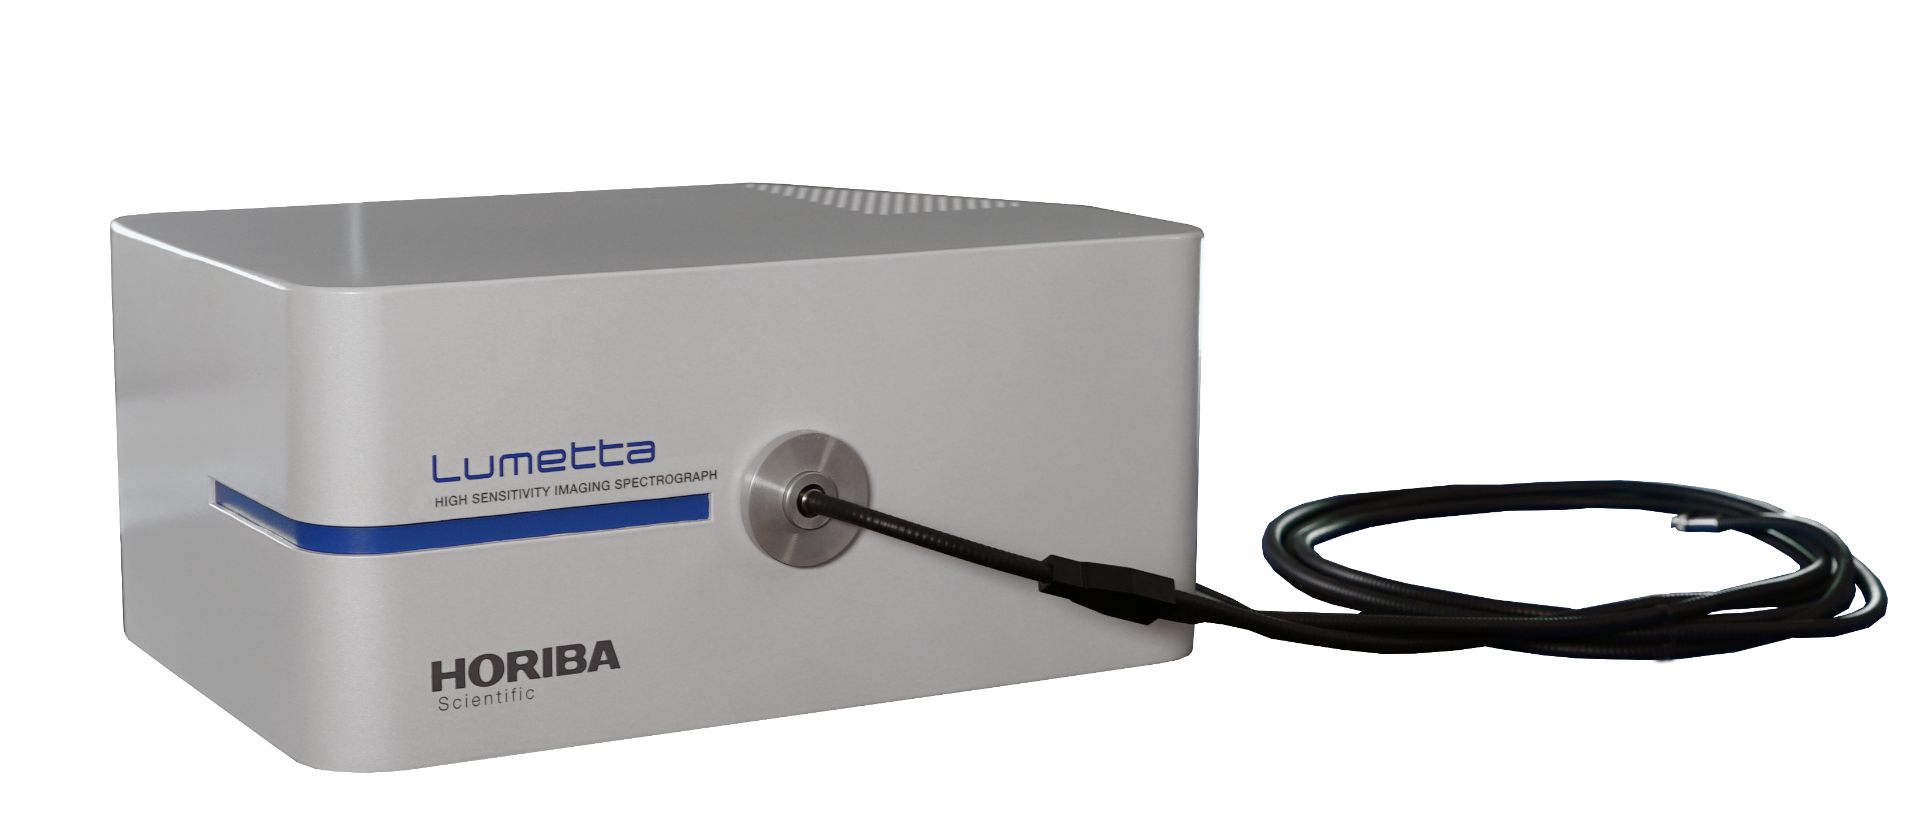 HORIBA Lumetta compact spectrograph